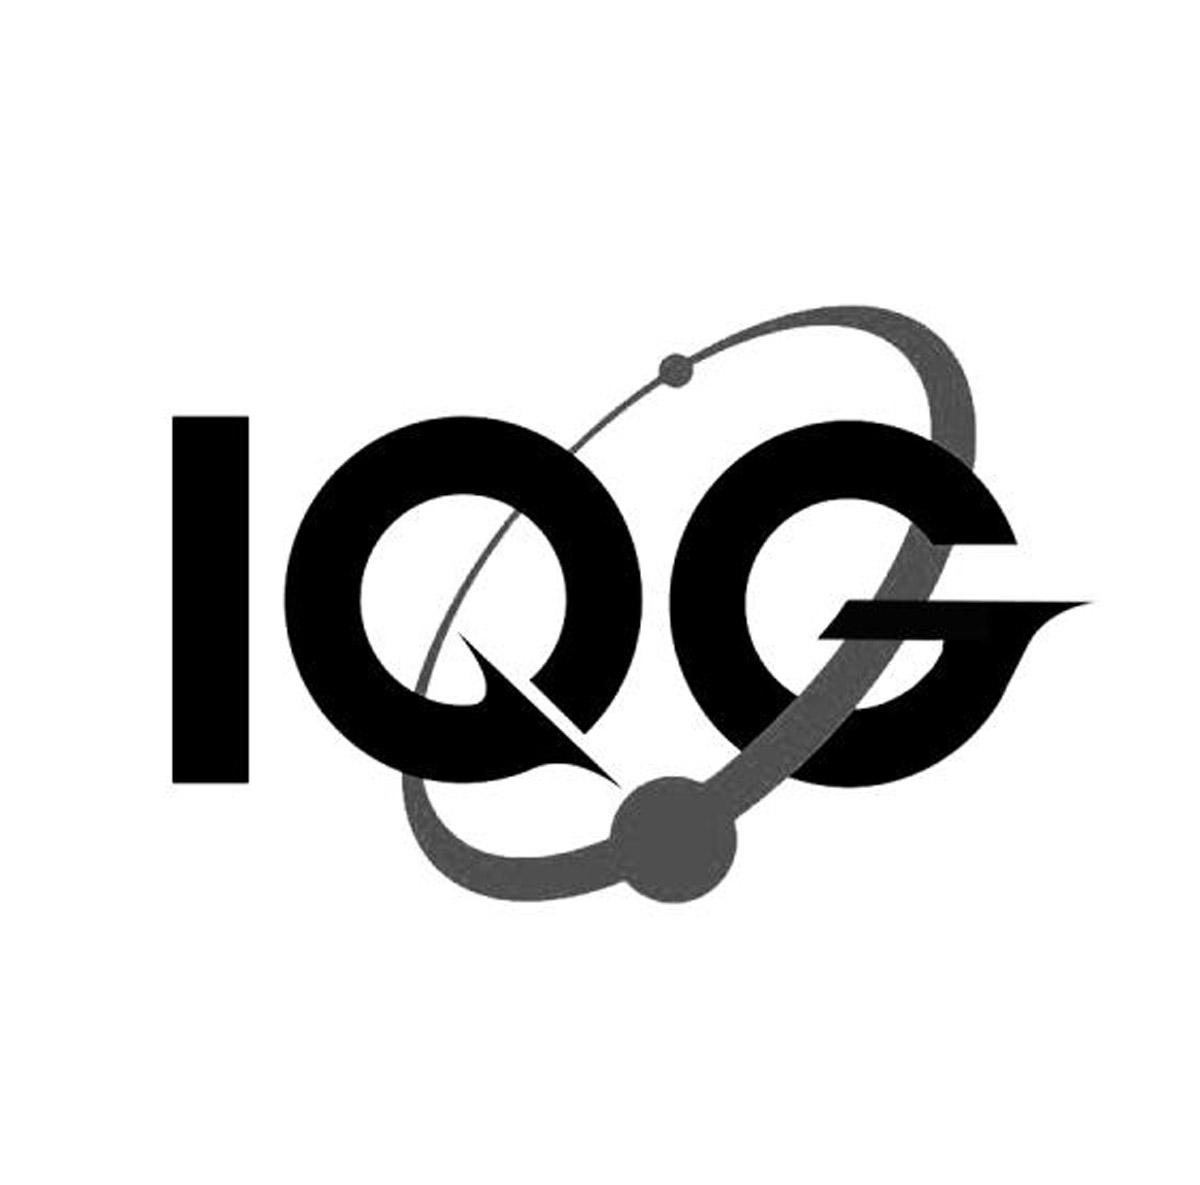 IQG